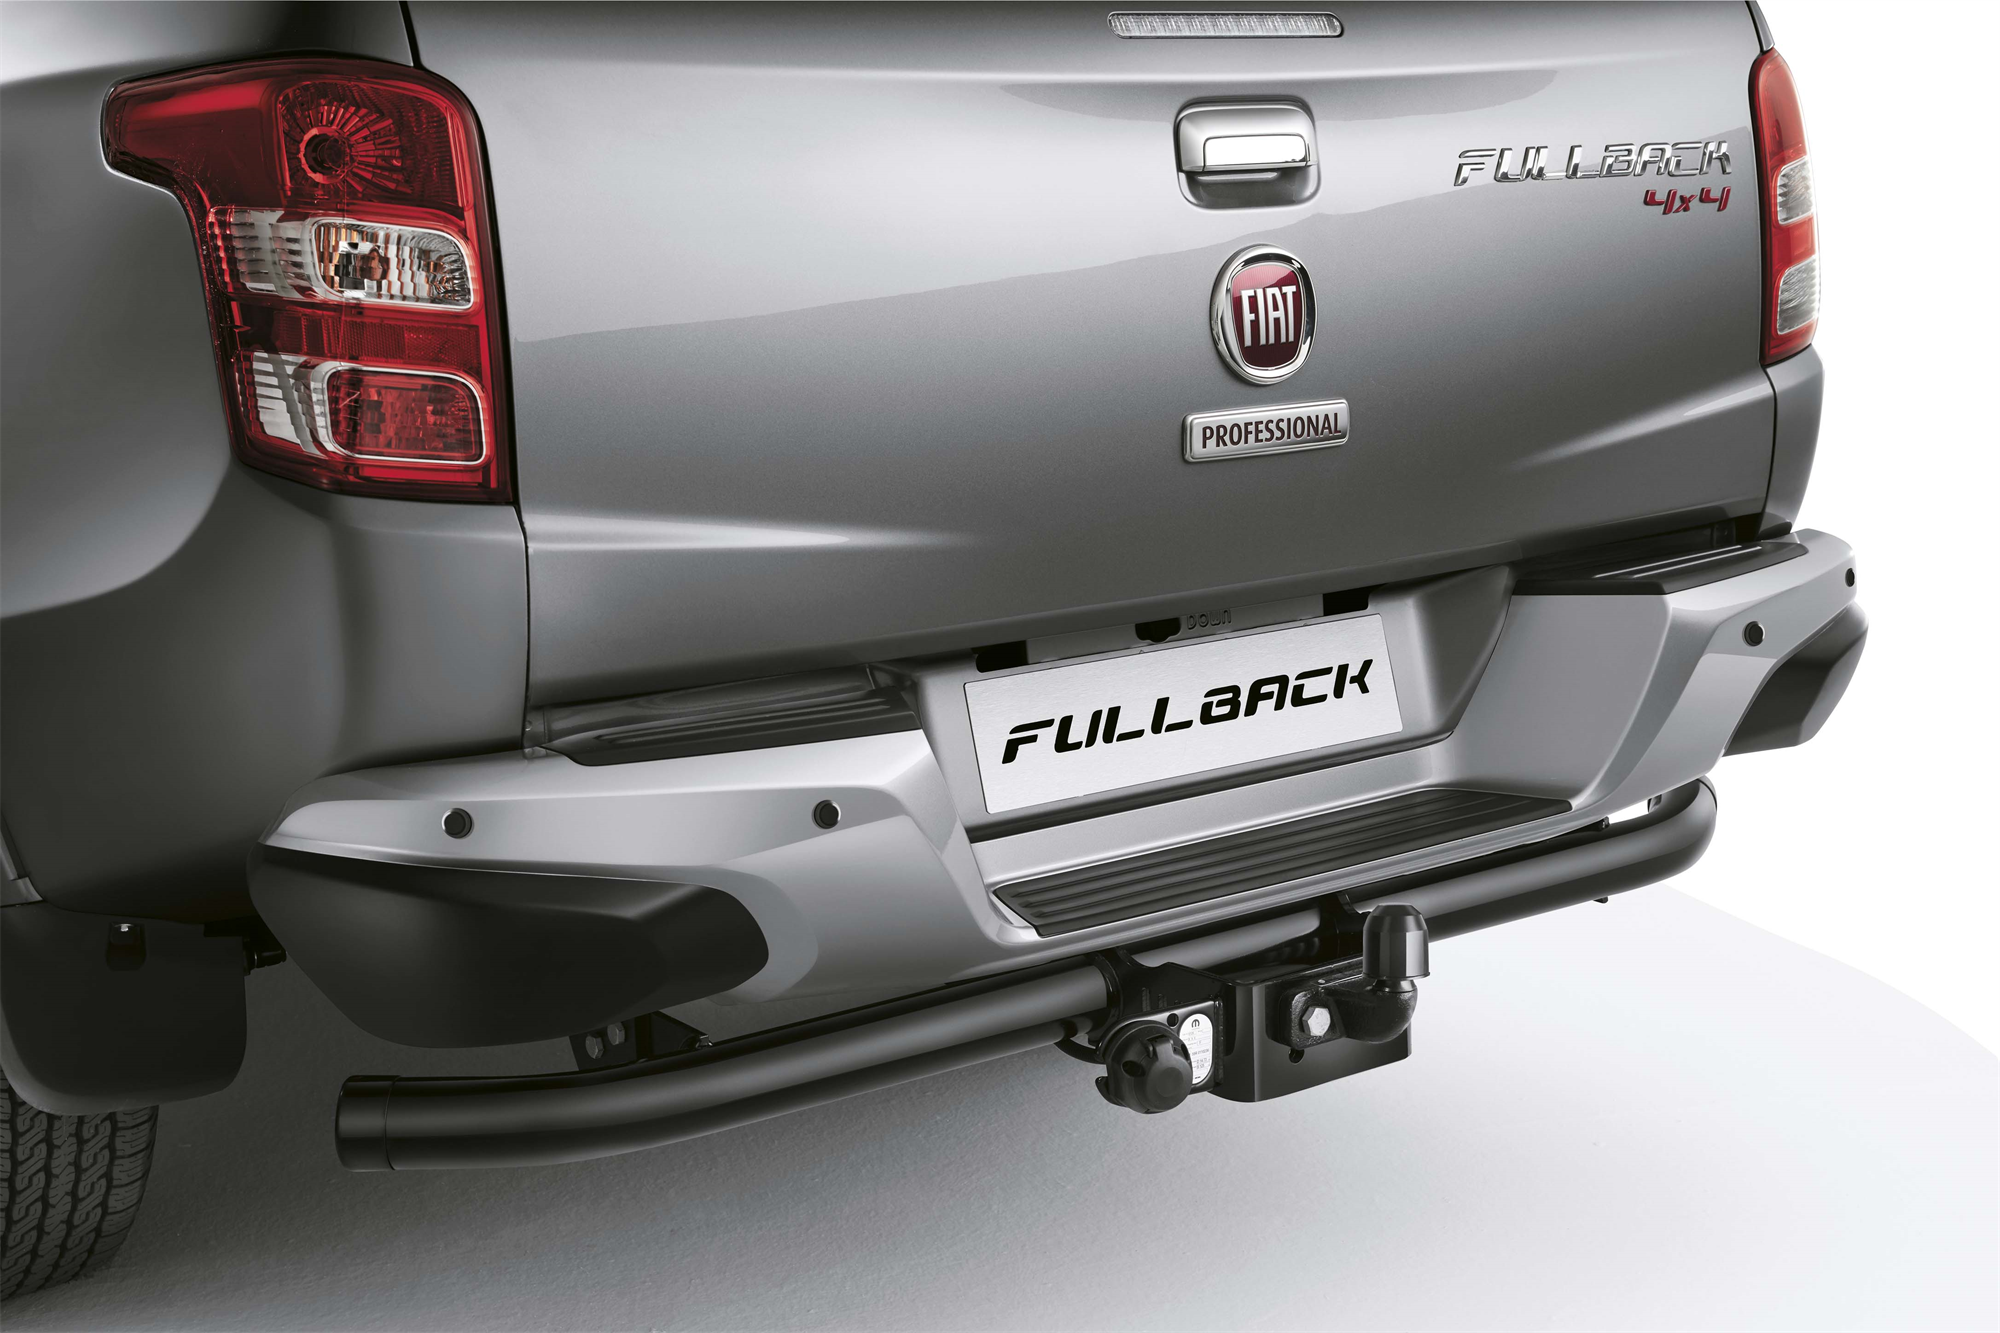 Zubehör für Fiat Ducato, Fiat Doblo & Fiat Fullback